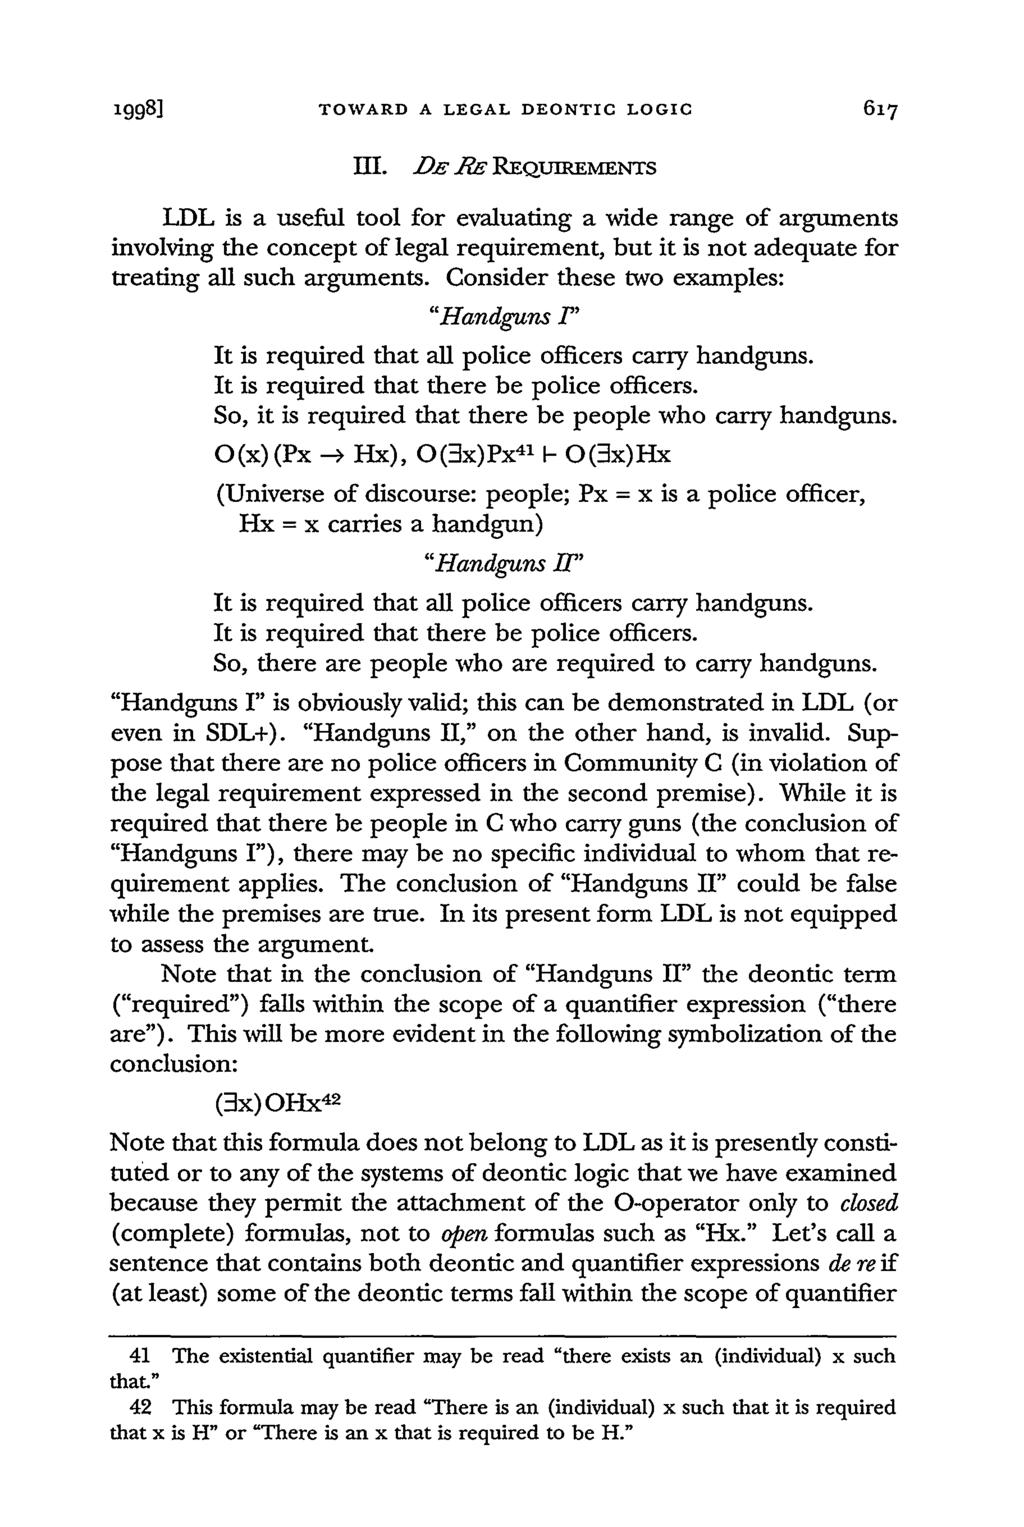 1998] TOWARD A LEGAL DEONTIC LOGIC III.